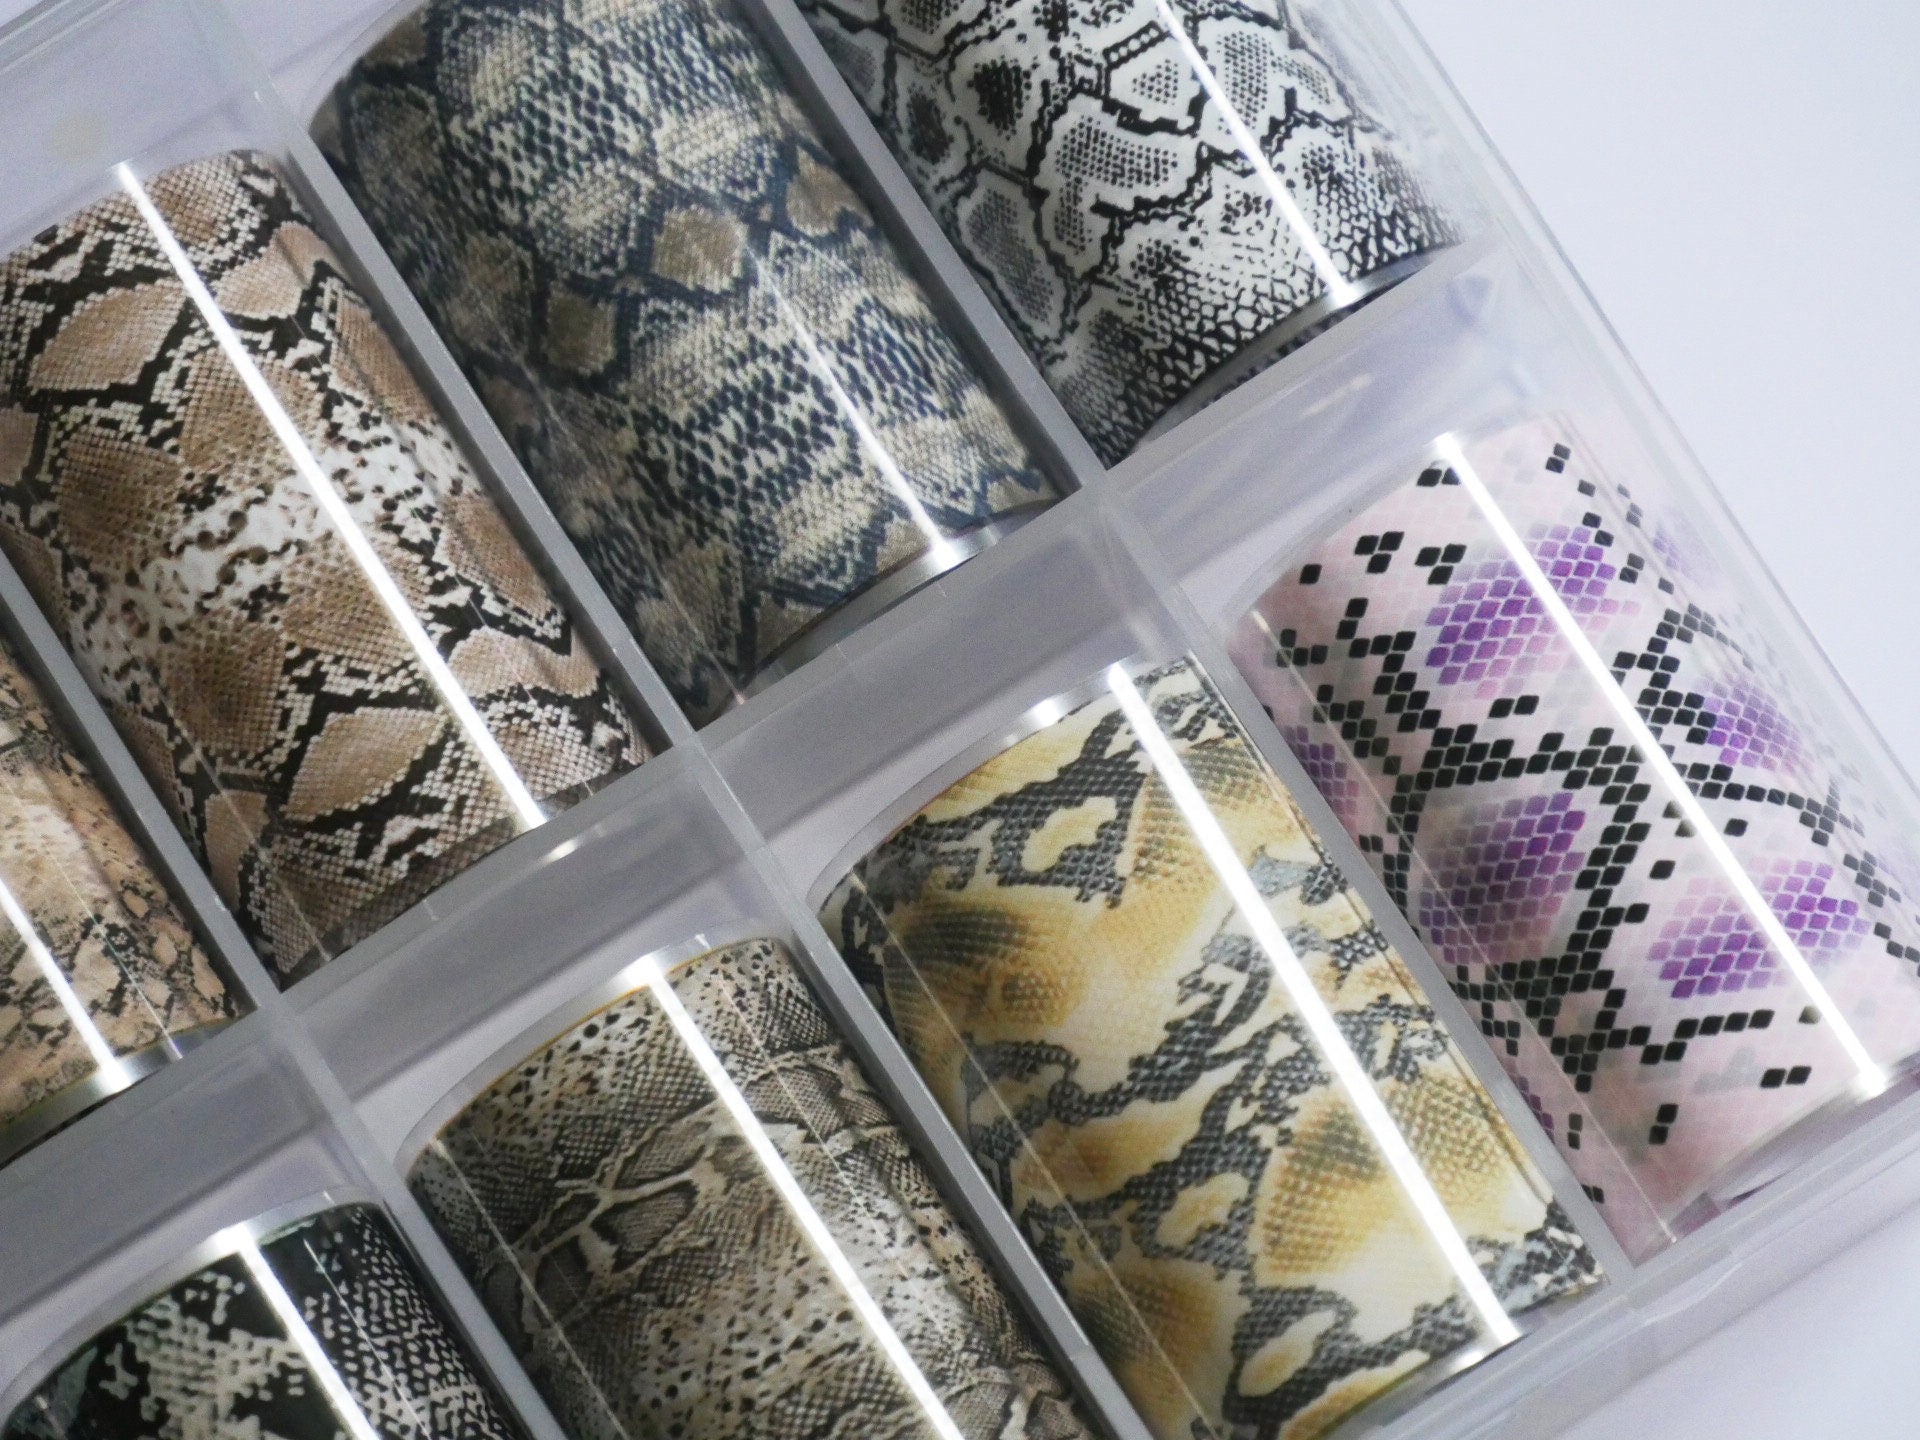 10pcs Snakeskin Print Nail Transfer Foil/ Animal pattern DIY nail transferring Foils Sticker 4x50cm Nail Art Foil Box Exotic Pythons